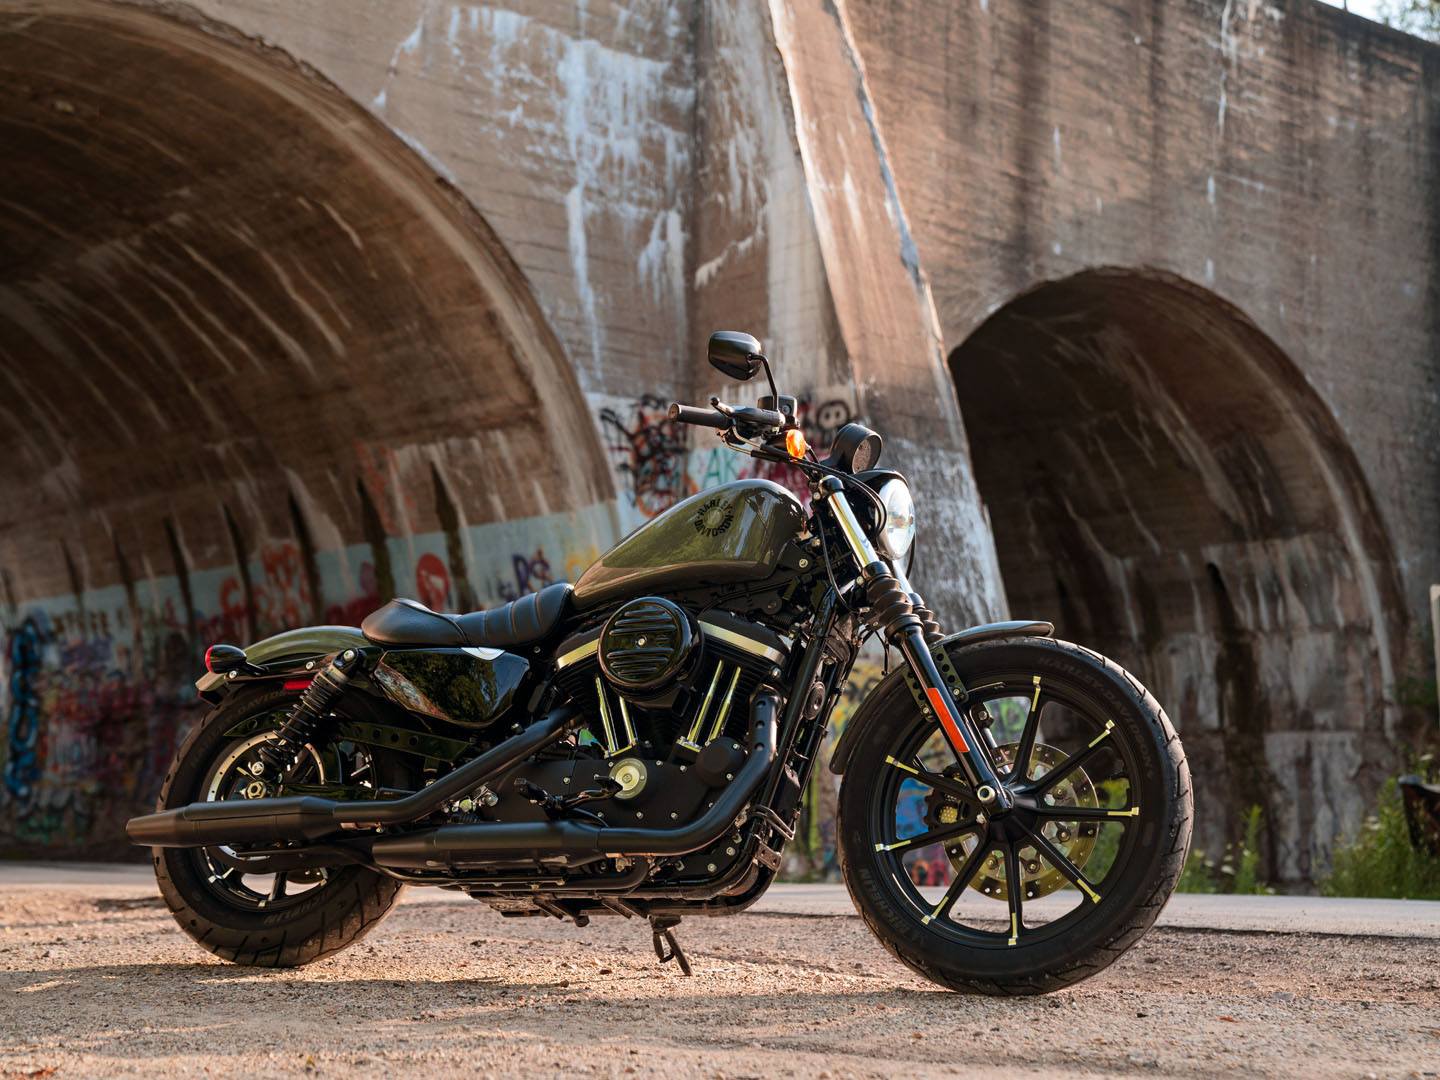 2021 Harley-Davidson Iron 883™ in San Jose, California - Photo 14